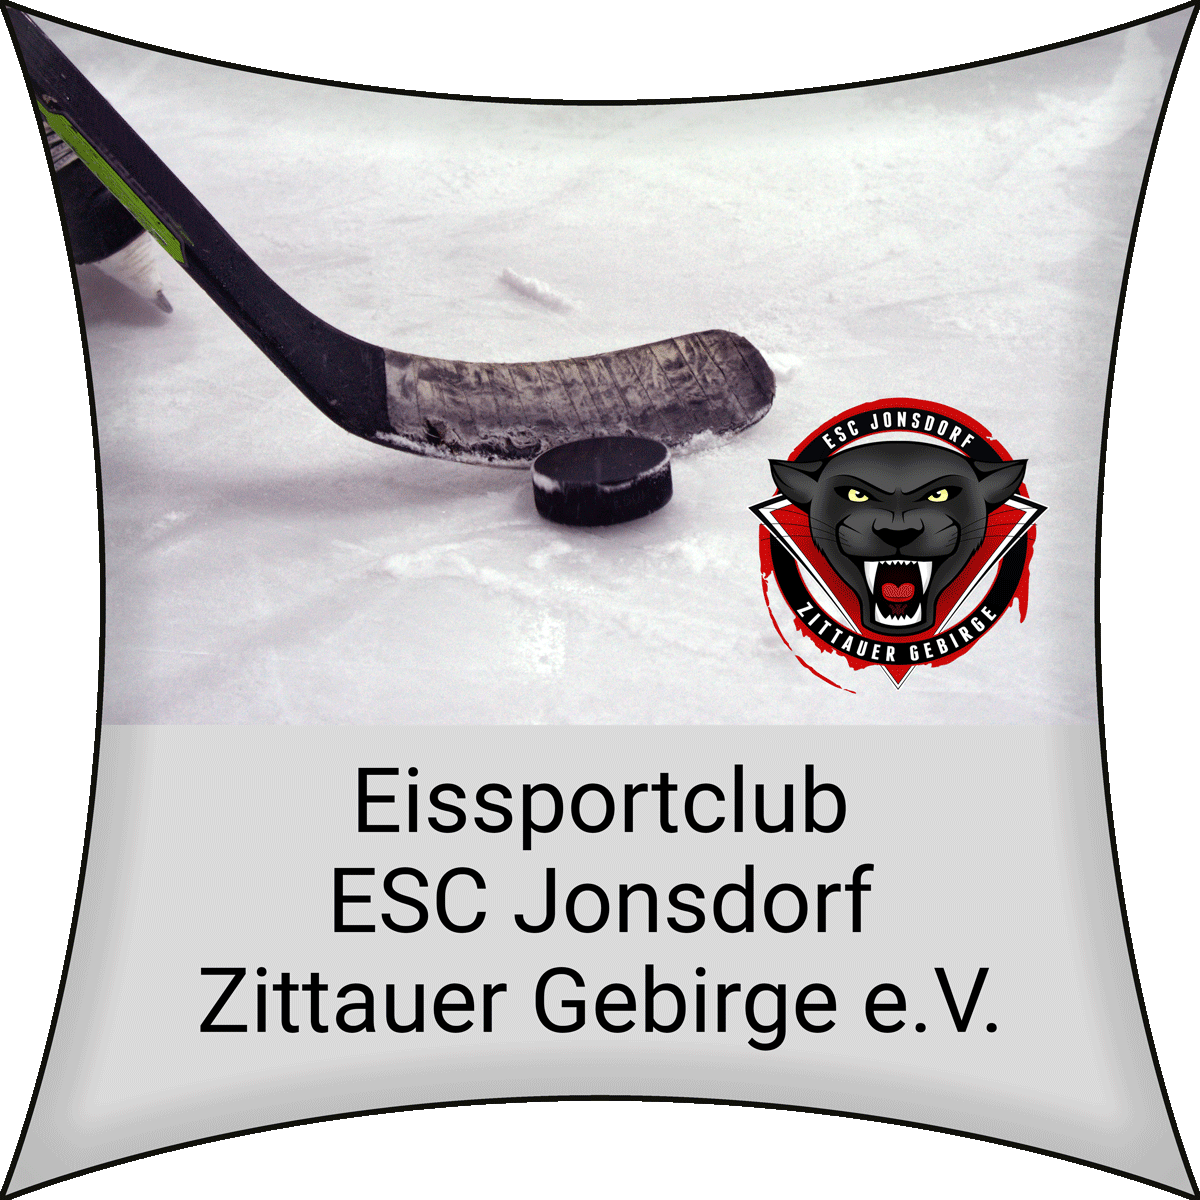 Eissportclub ESC Jonsdorf - Zittauer Gebirge e. V.